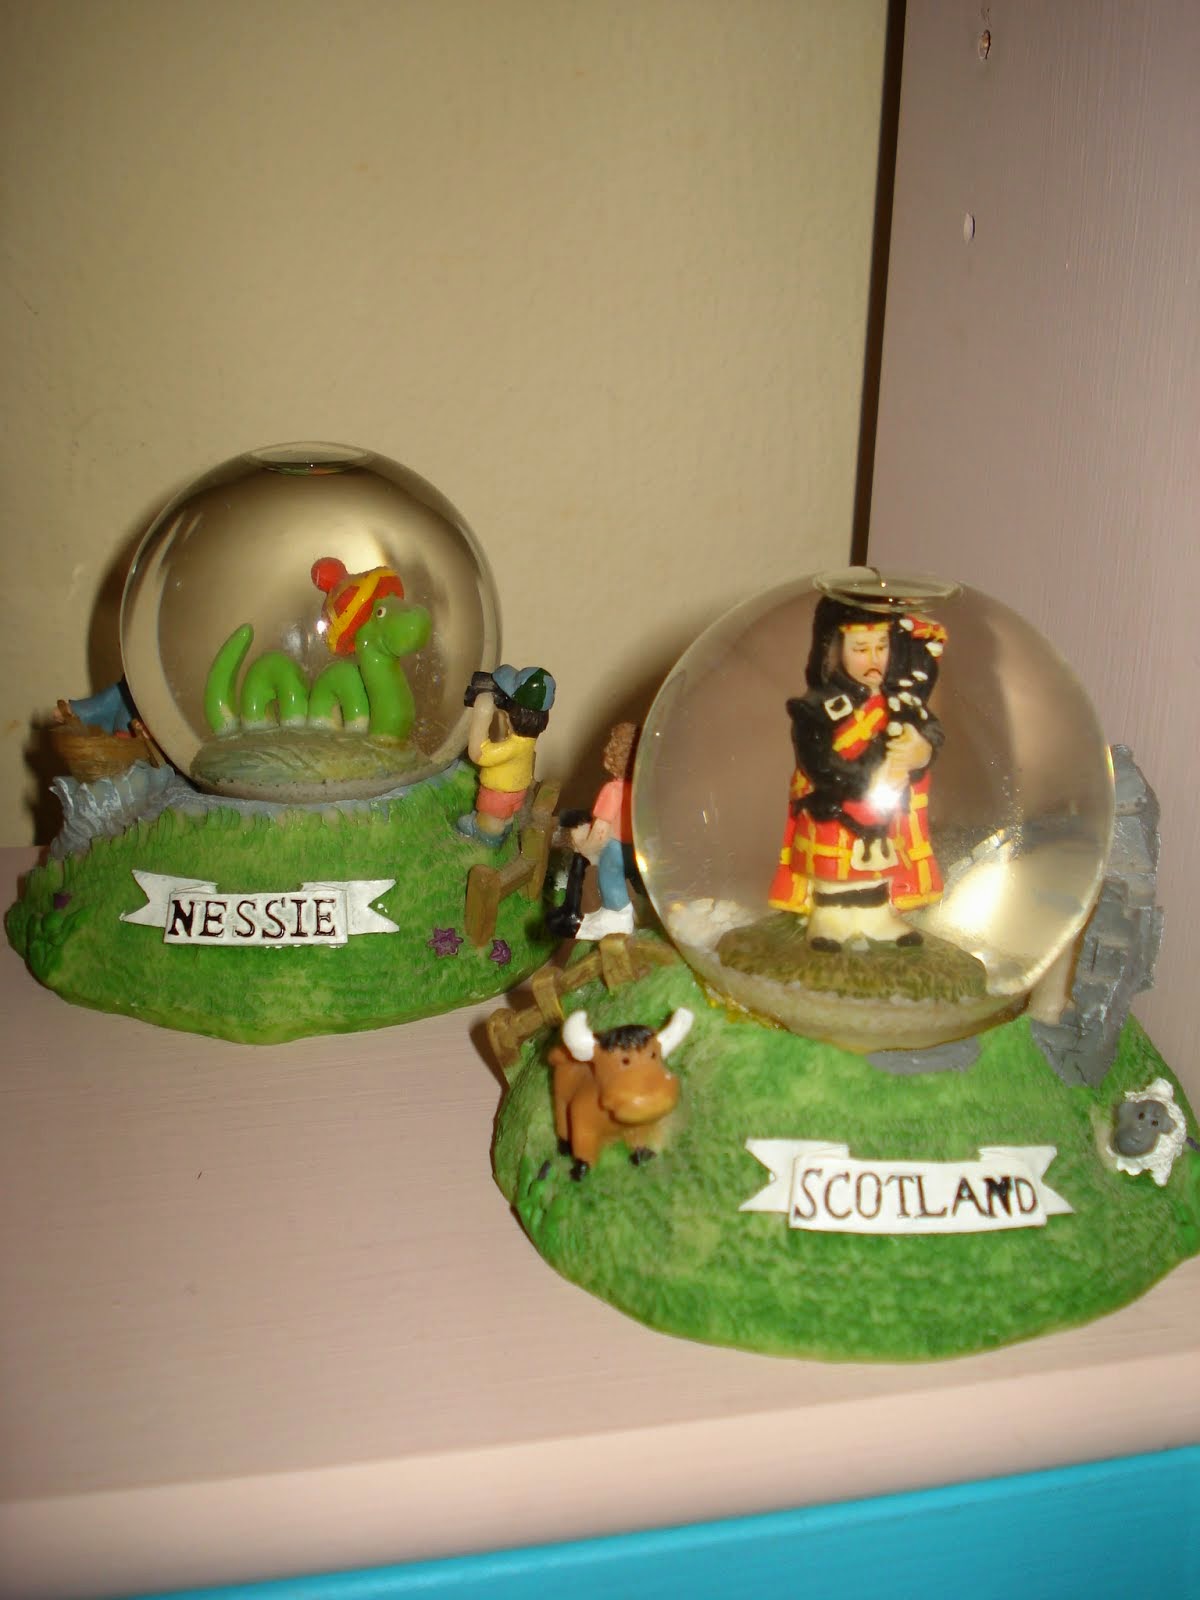 Scotland-Nessie